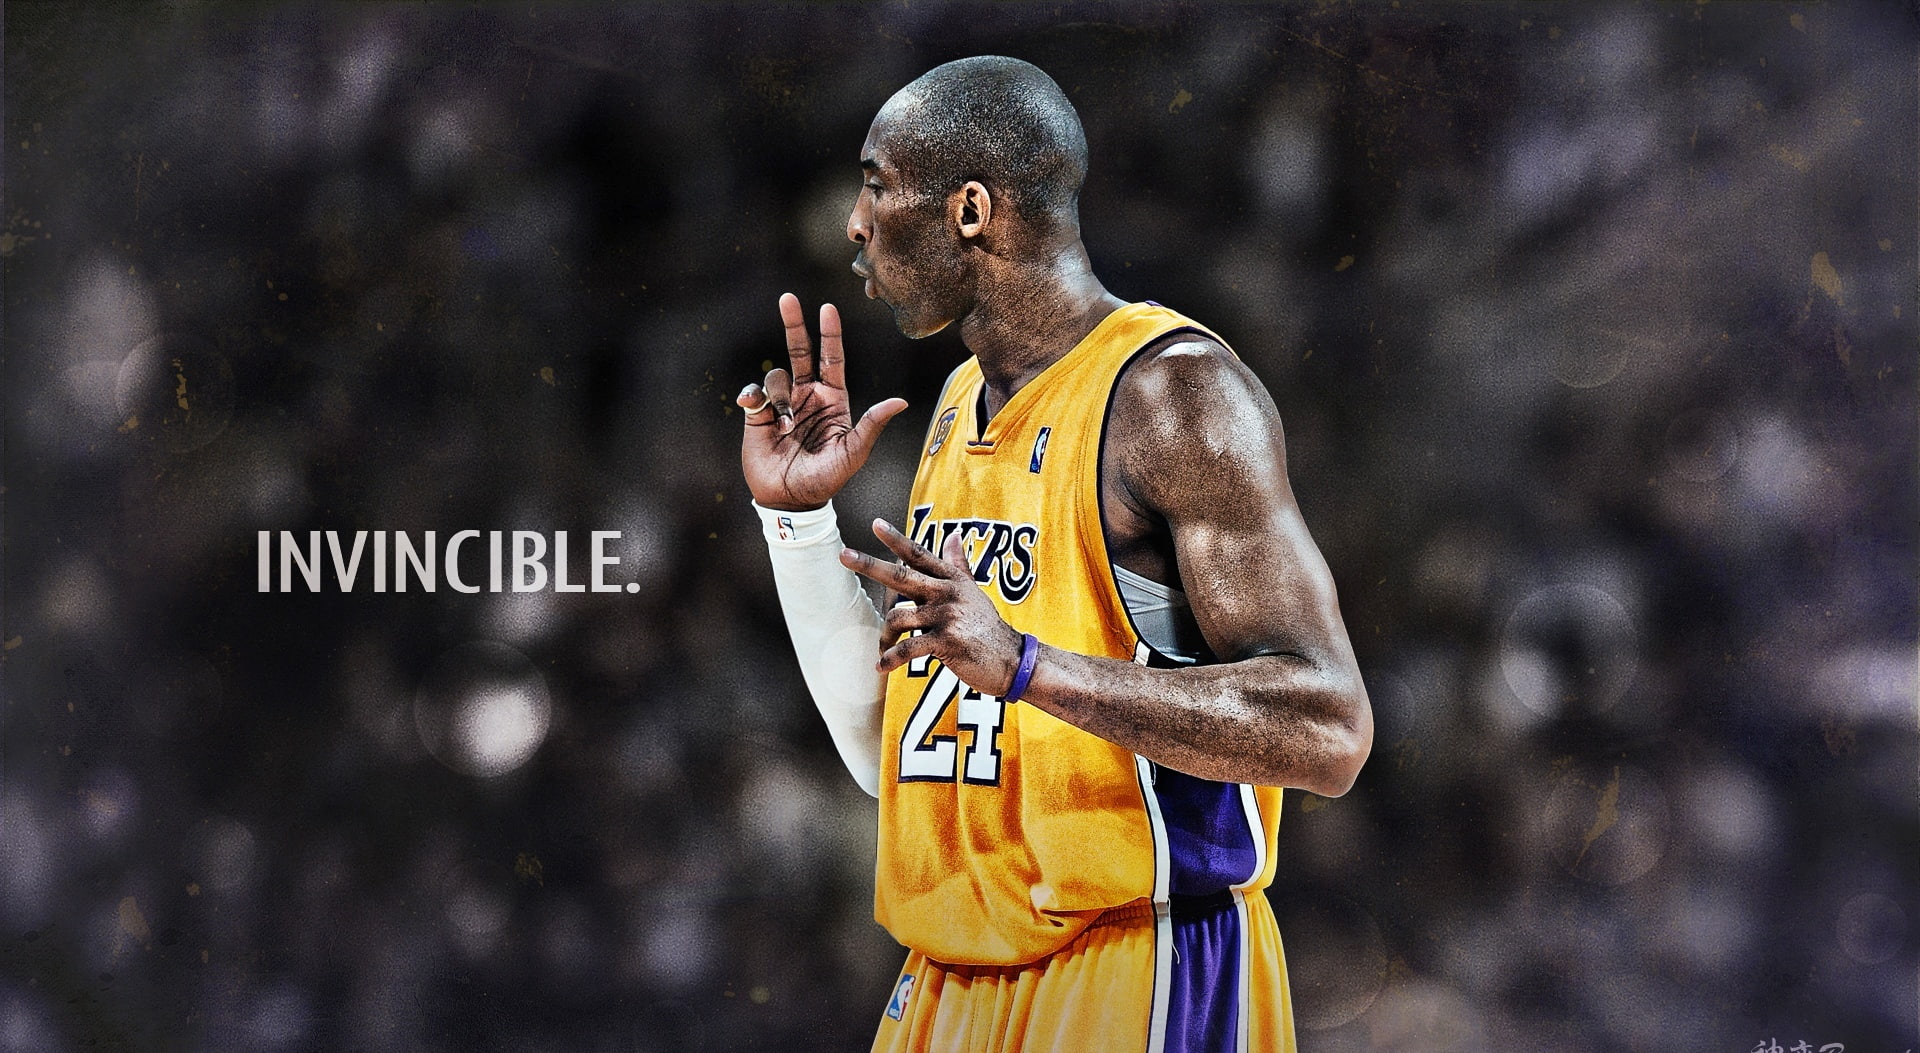 Kobe Bryant Invincible HD Wallpaper, Kobe Bryant, Sports, Basketball